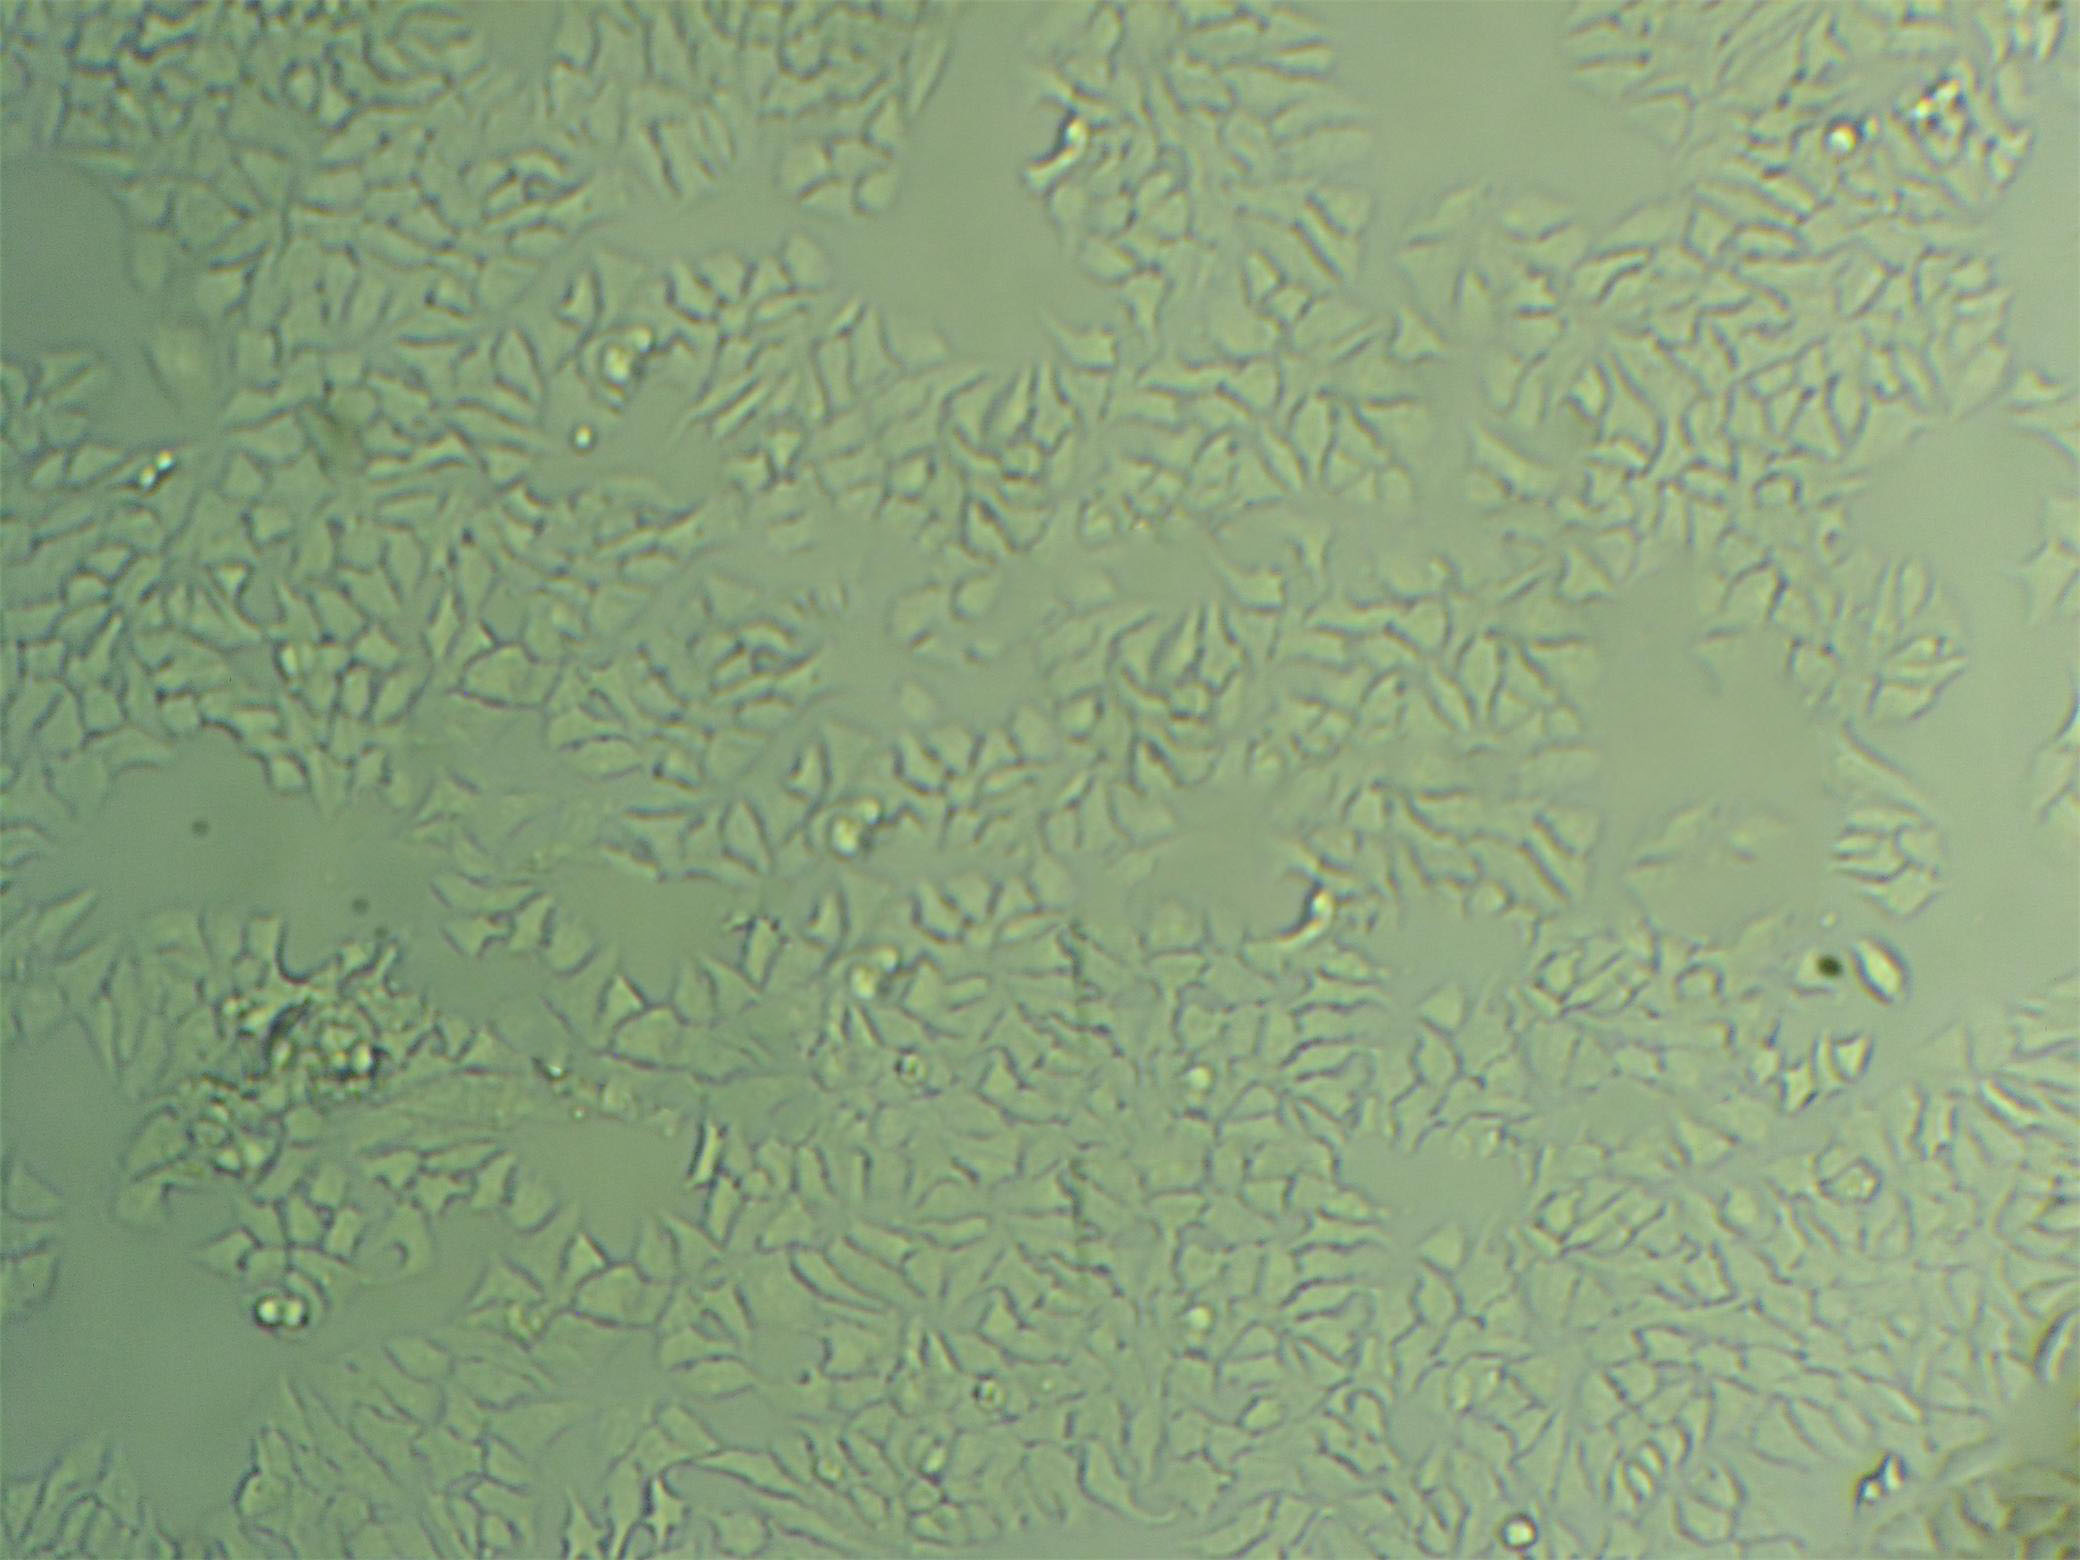 6-10B cell line人鼻咽癌细胞系